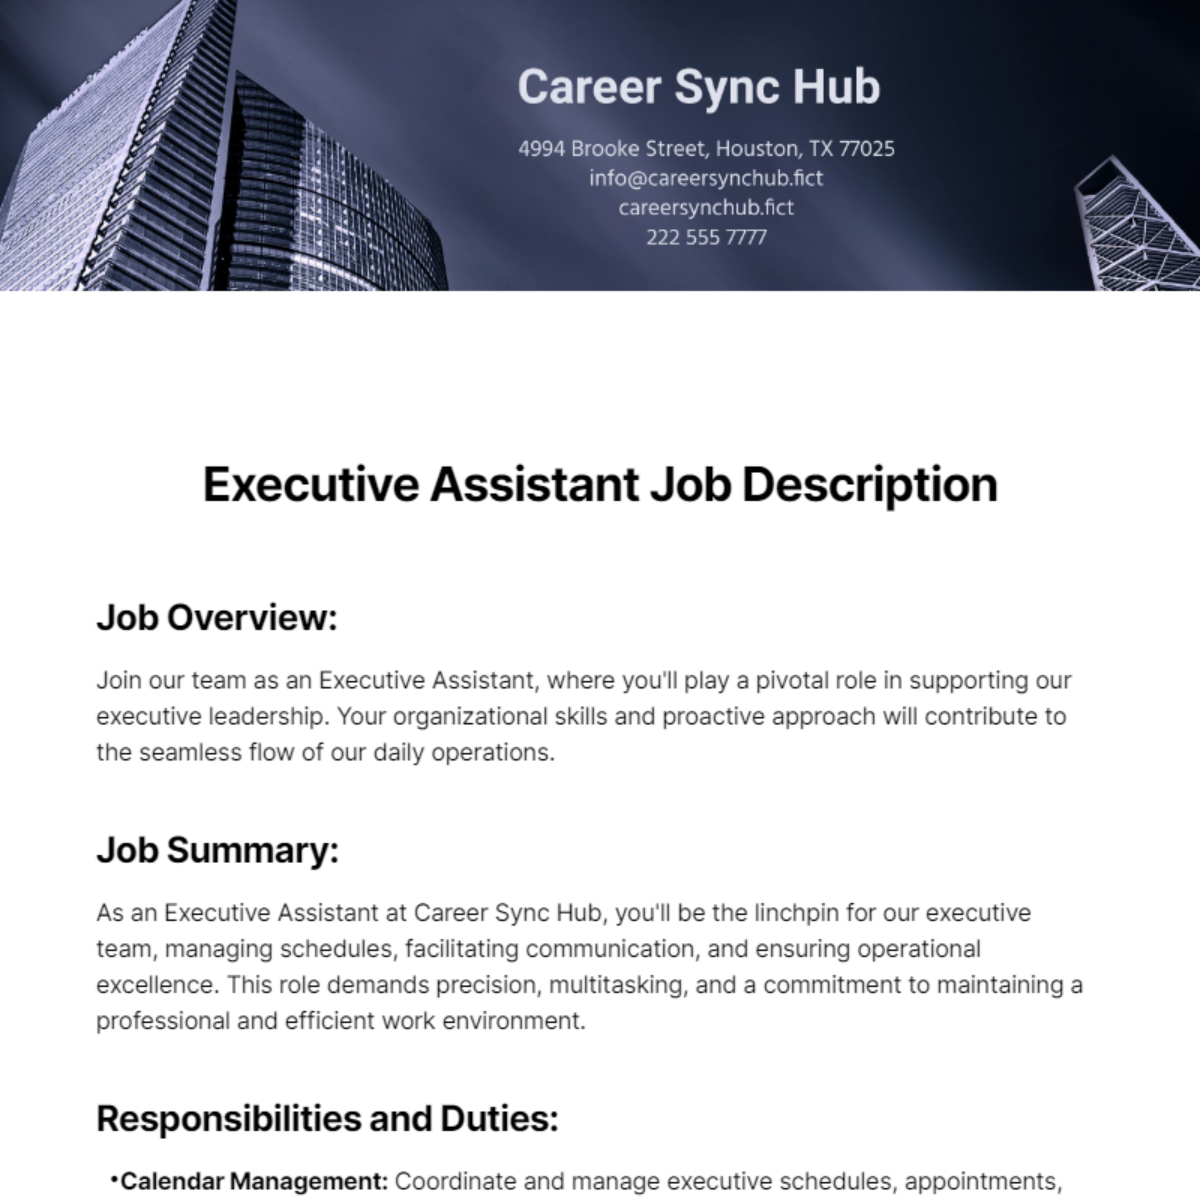 Free Executive Assistant Job Description Template